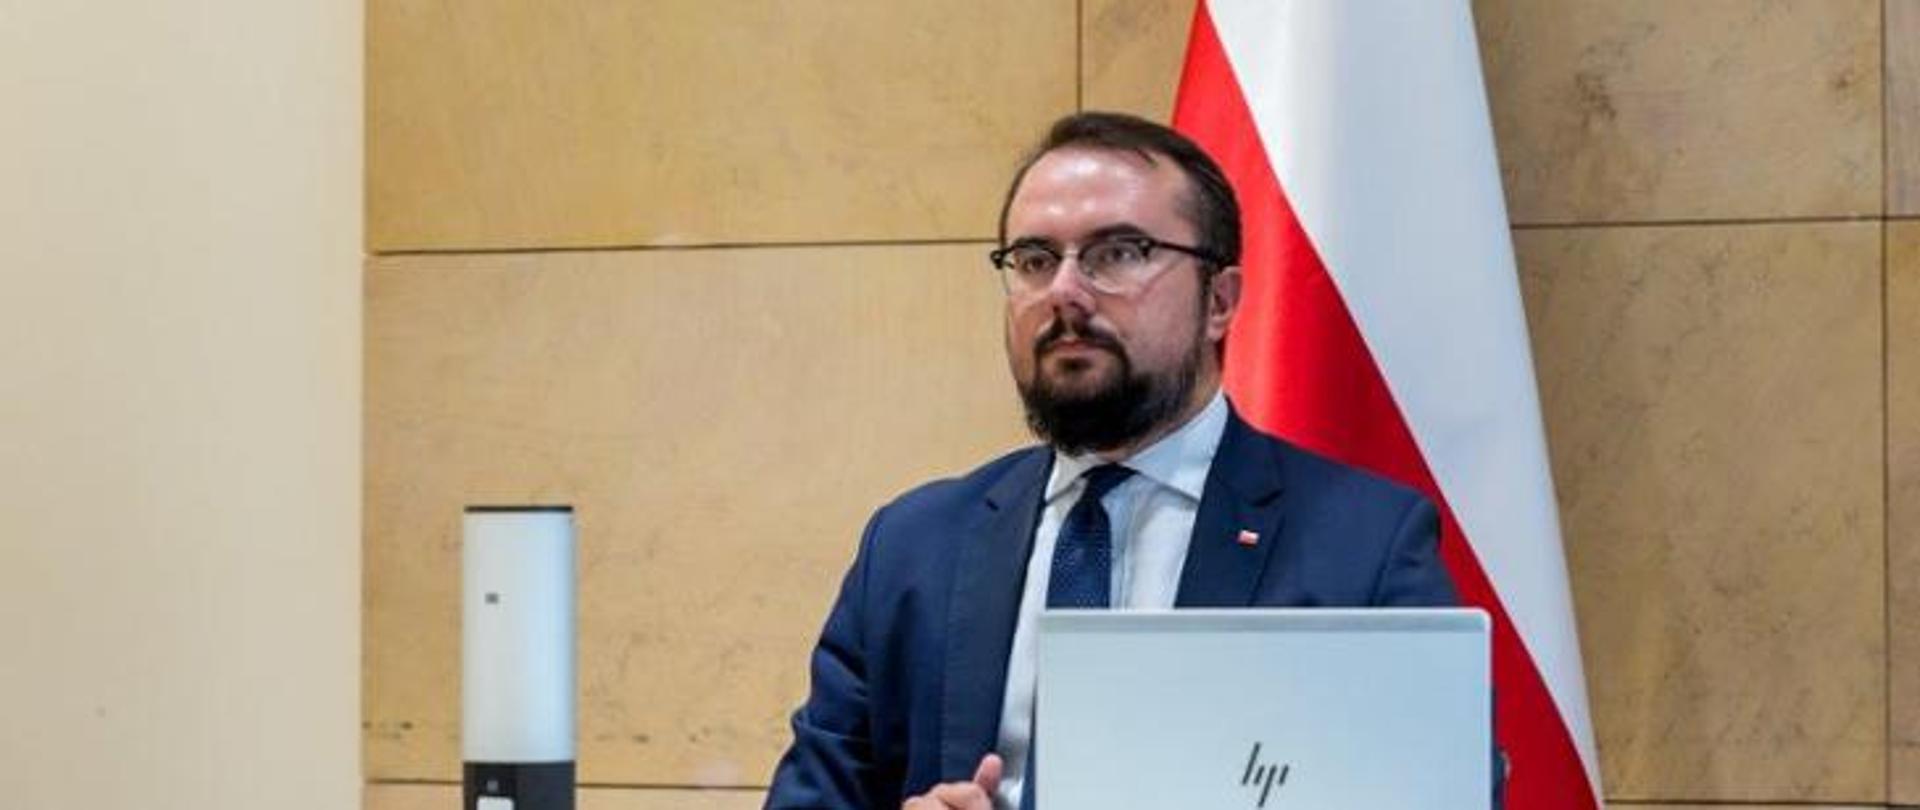 Undersecretary of State at the Ministry of Foreign Affairs Paweł Jabłoński